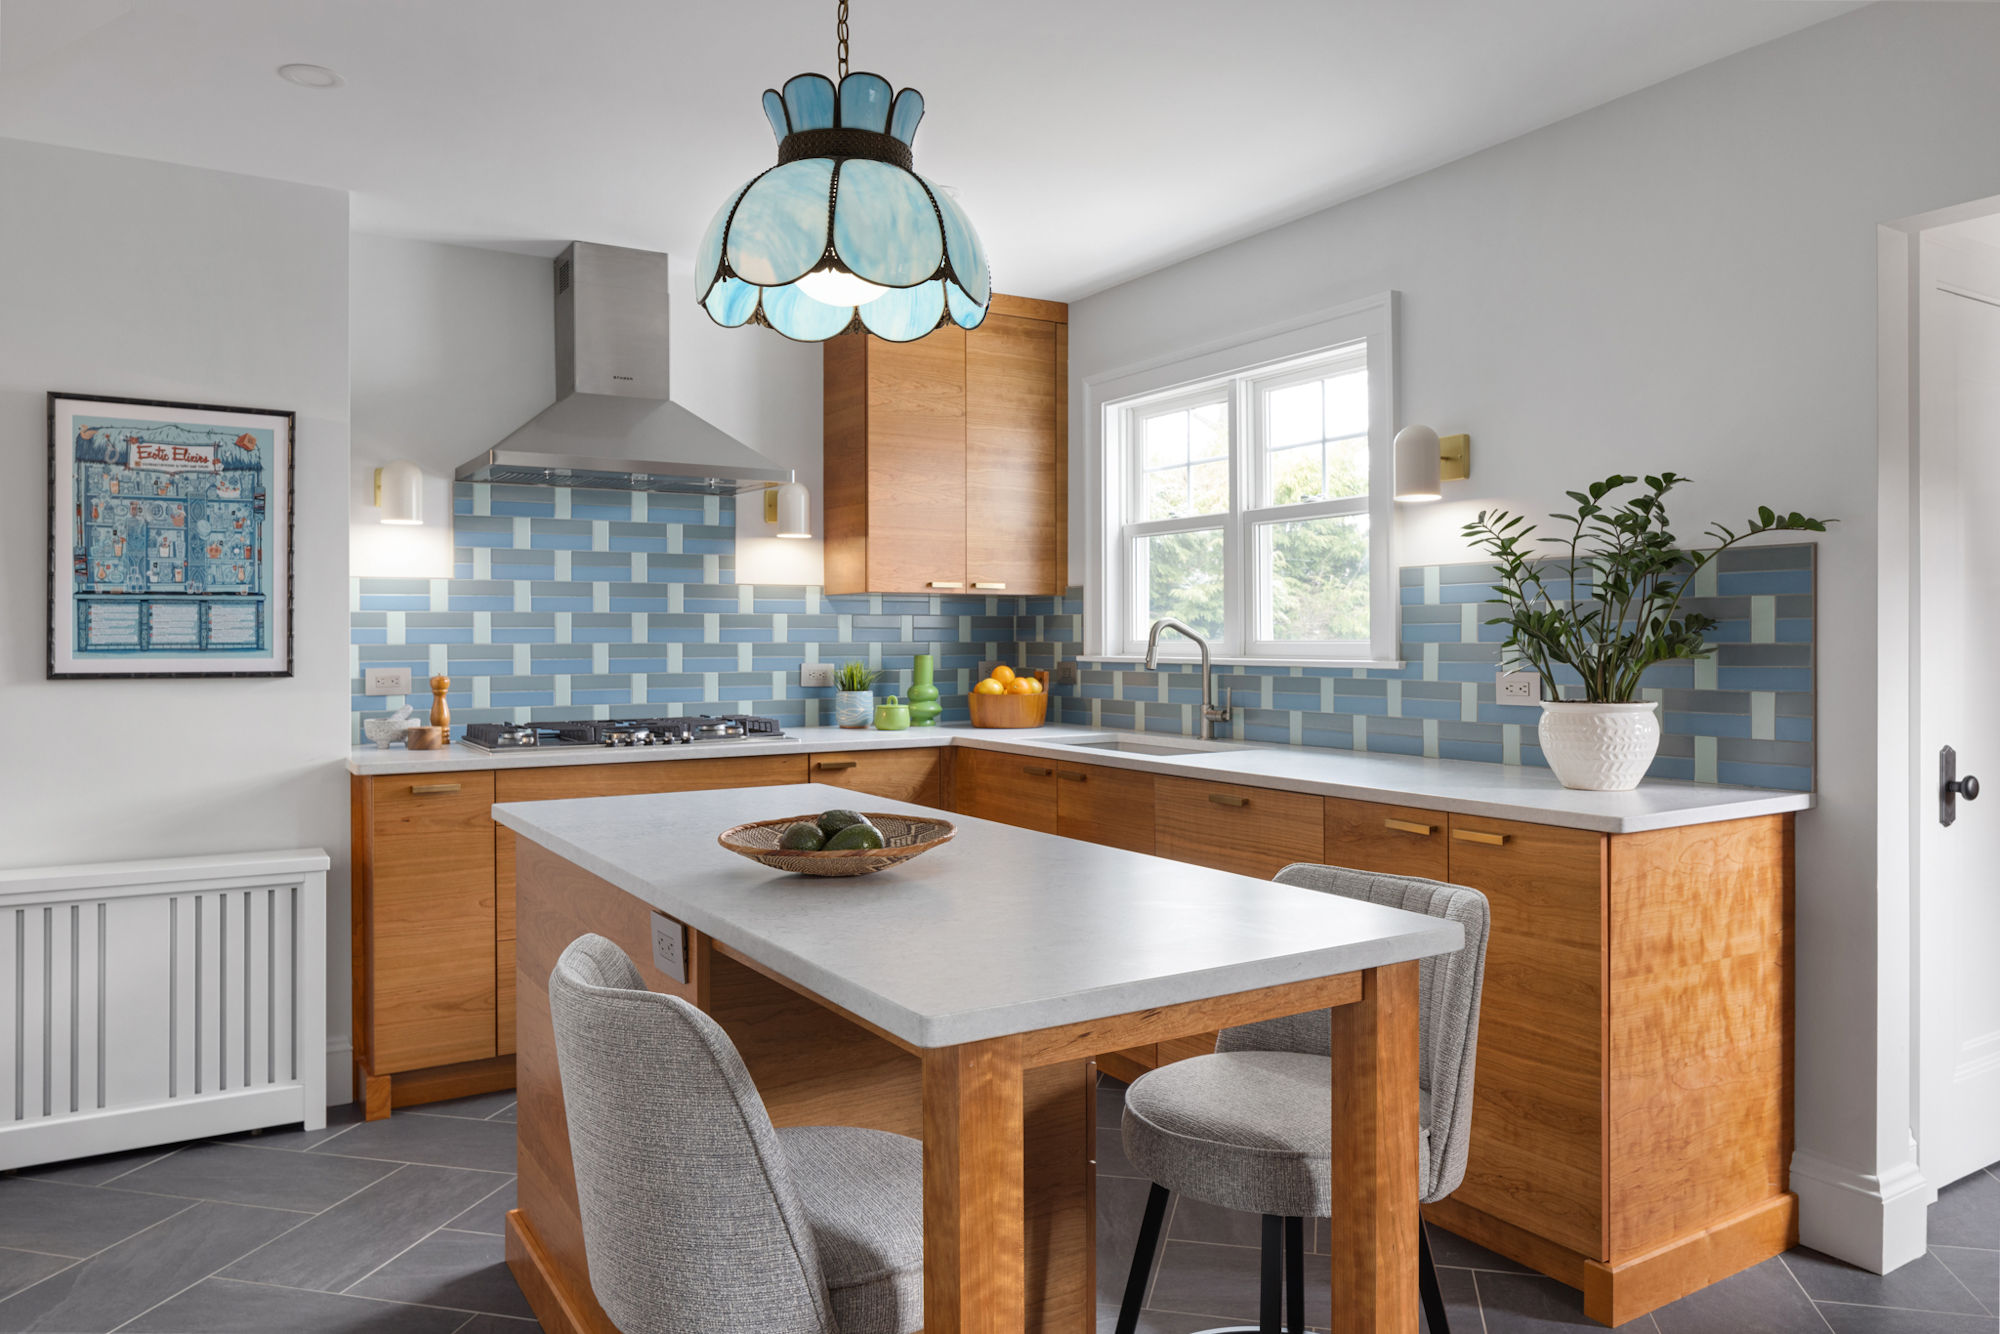 Medford Vintage Kitchen Design with cherry cabinets and a custom tile backsplash in shades of blue.